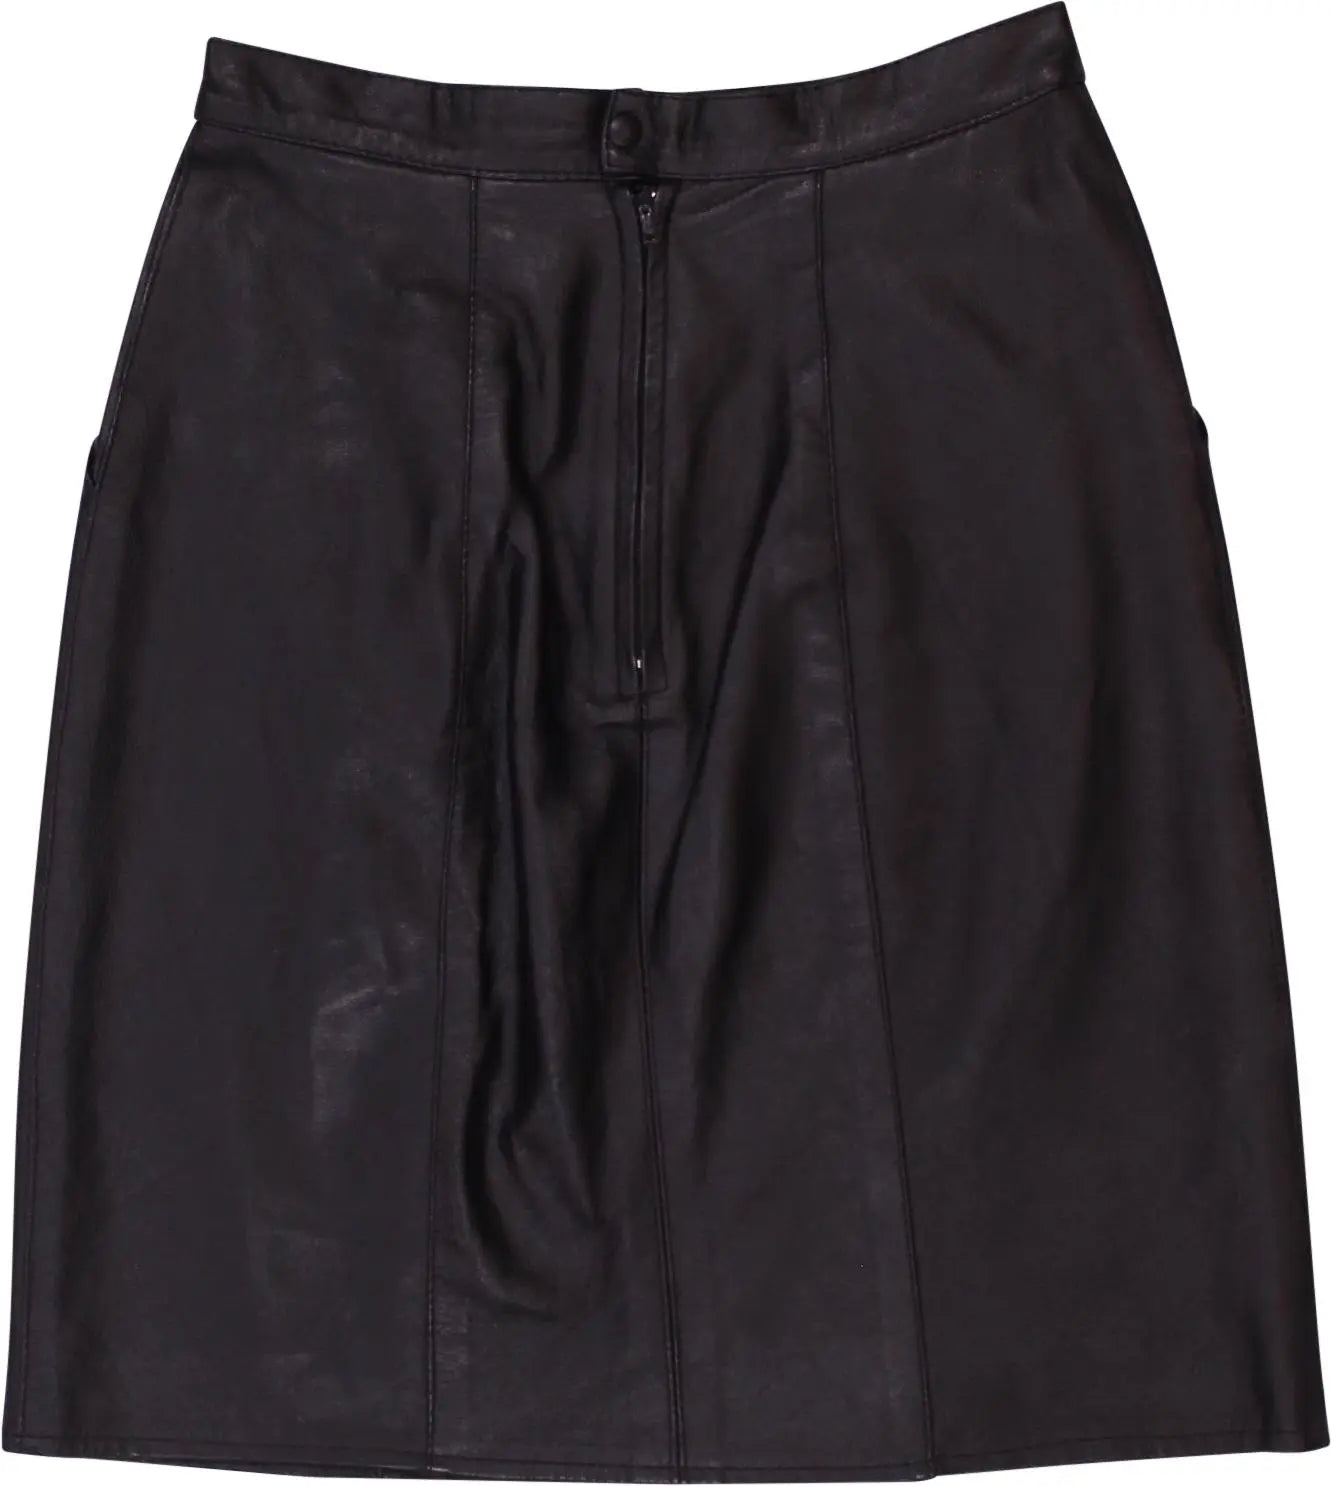 Daude Paris - Leather Short Skirt- ThriftTale.com - Vintage and second handclothing